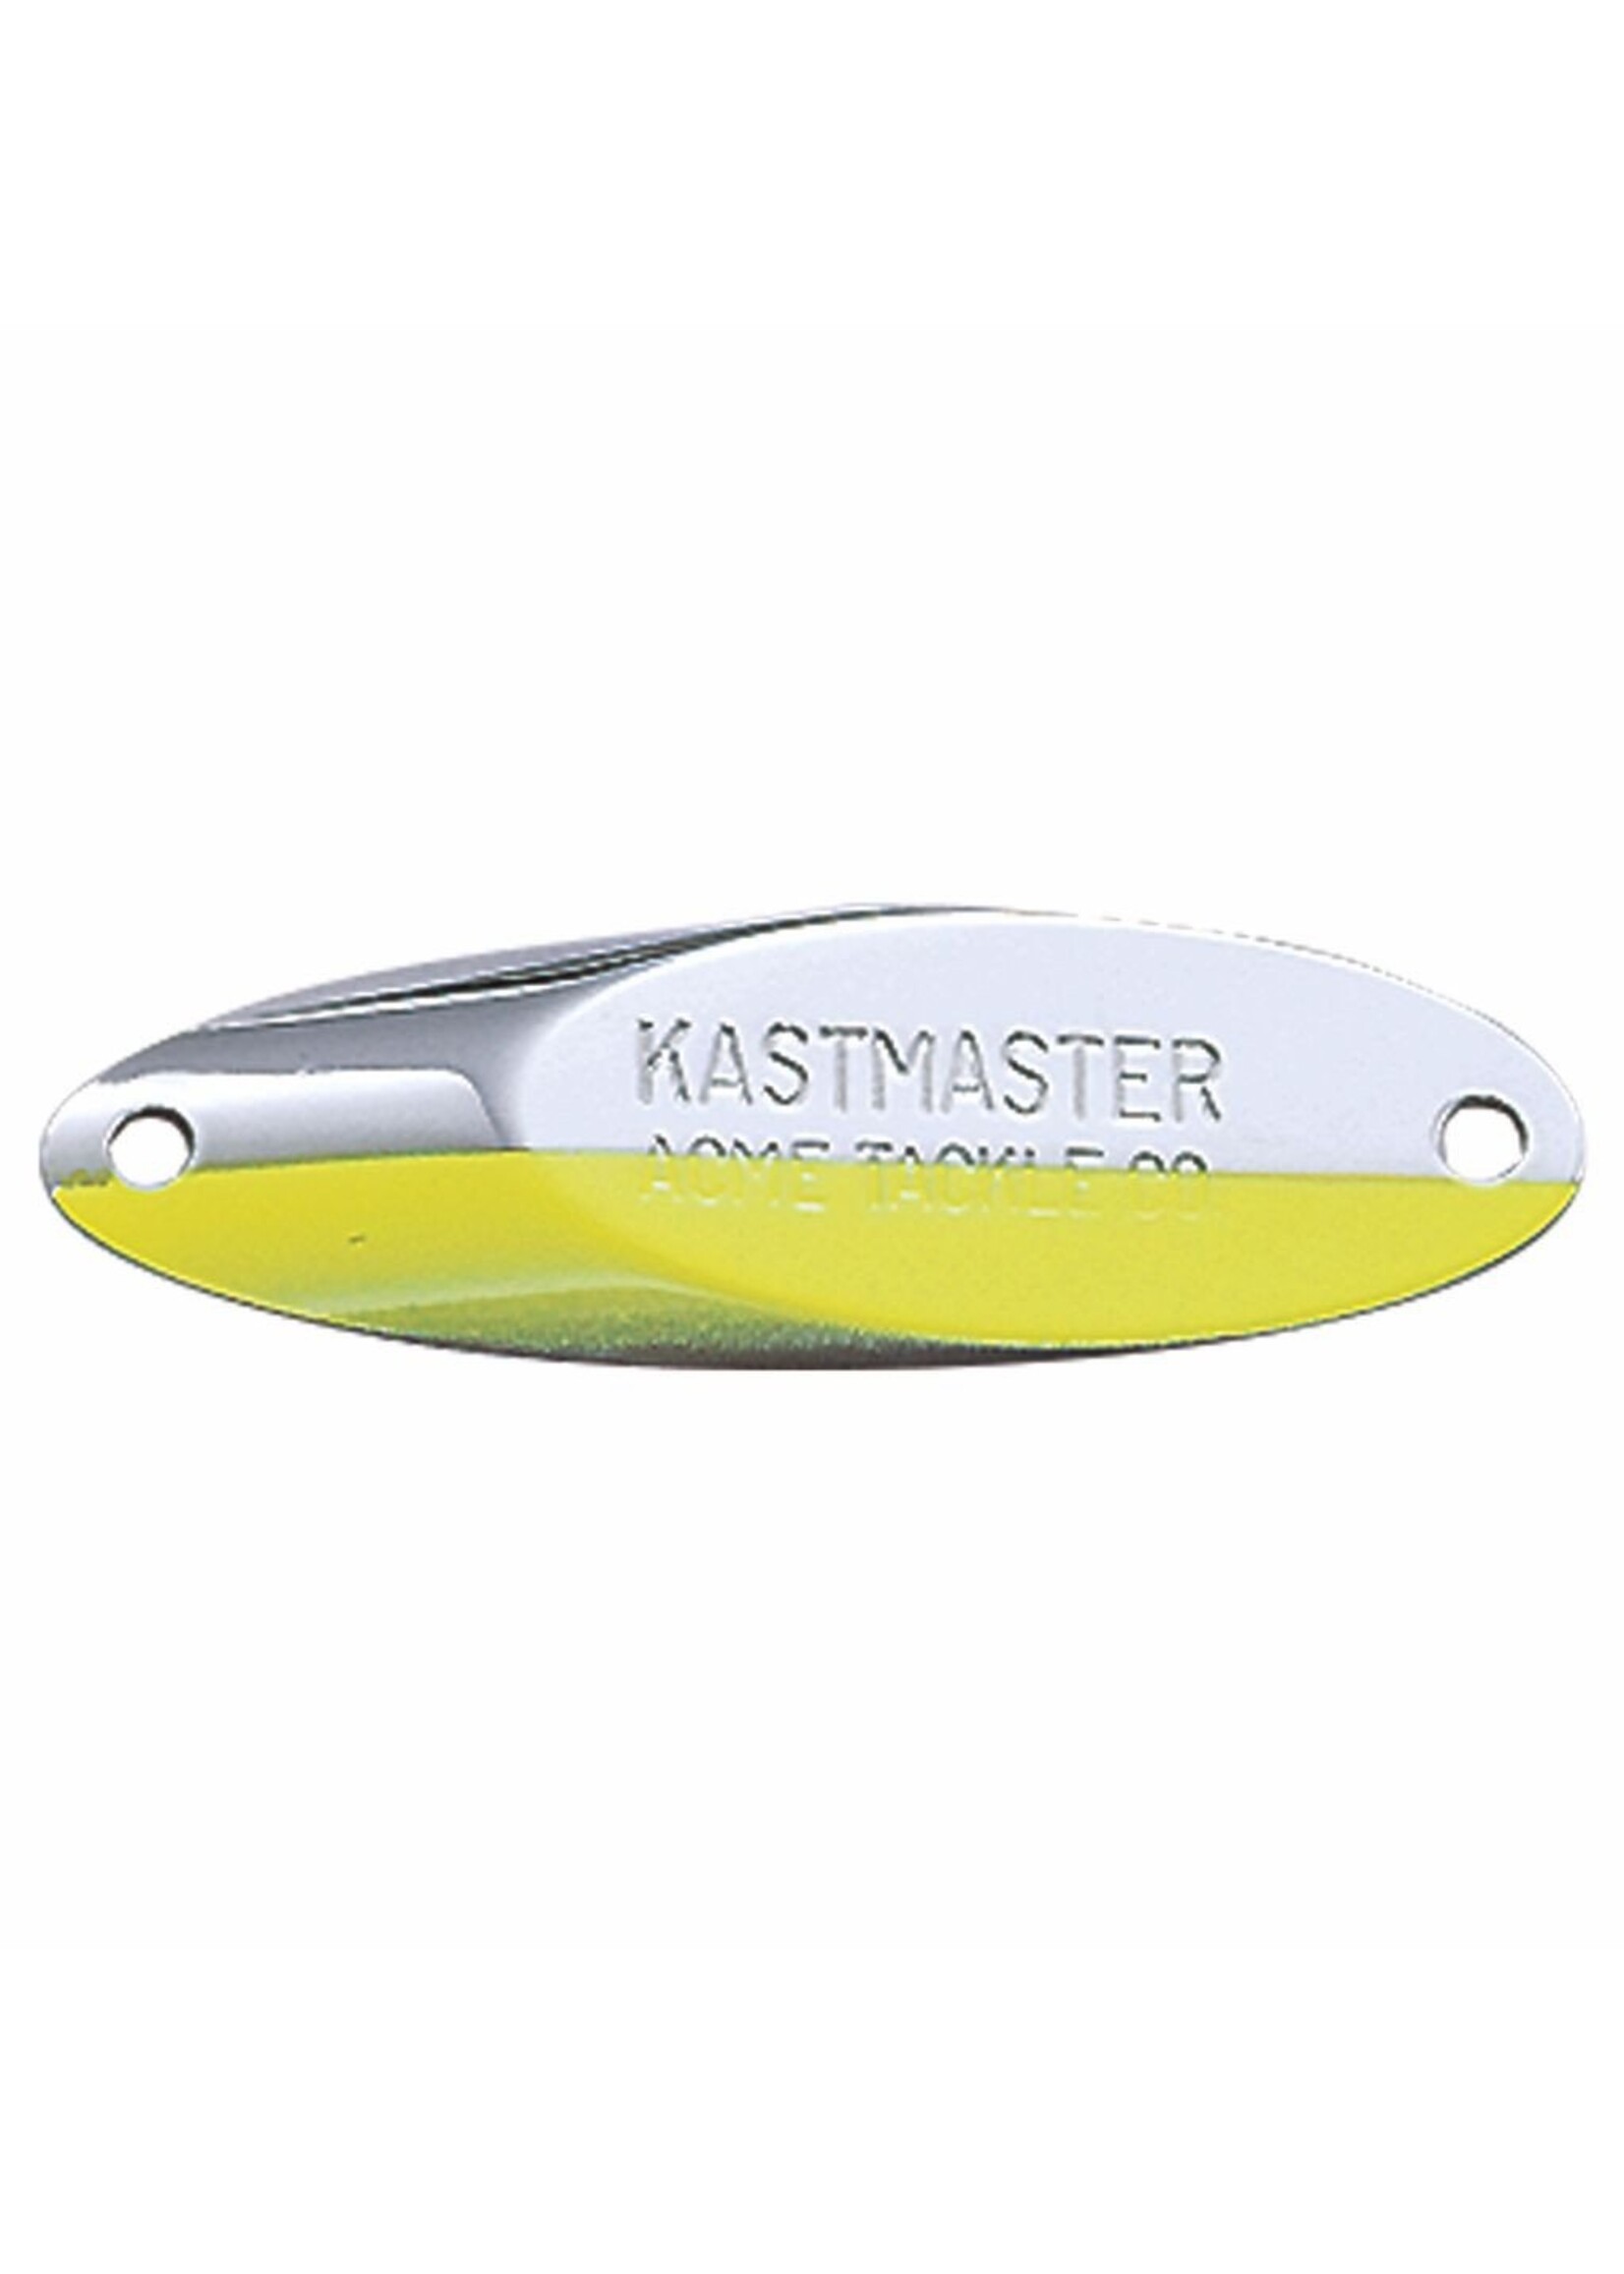 Acme Kastmaster Spoon - 1/12 oz. - Chrome